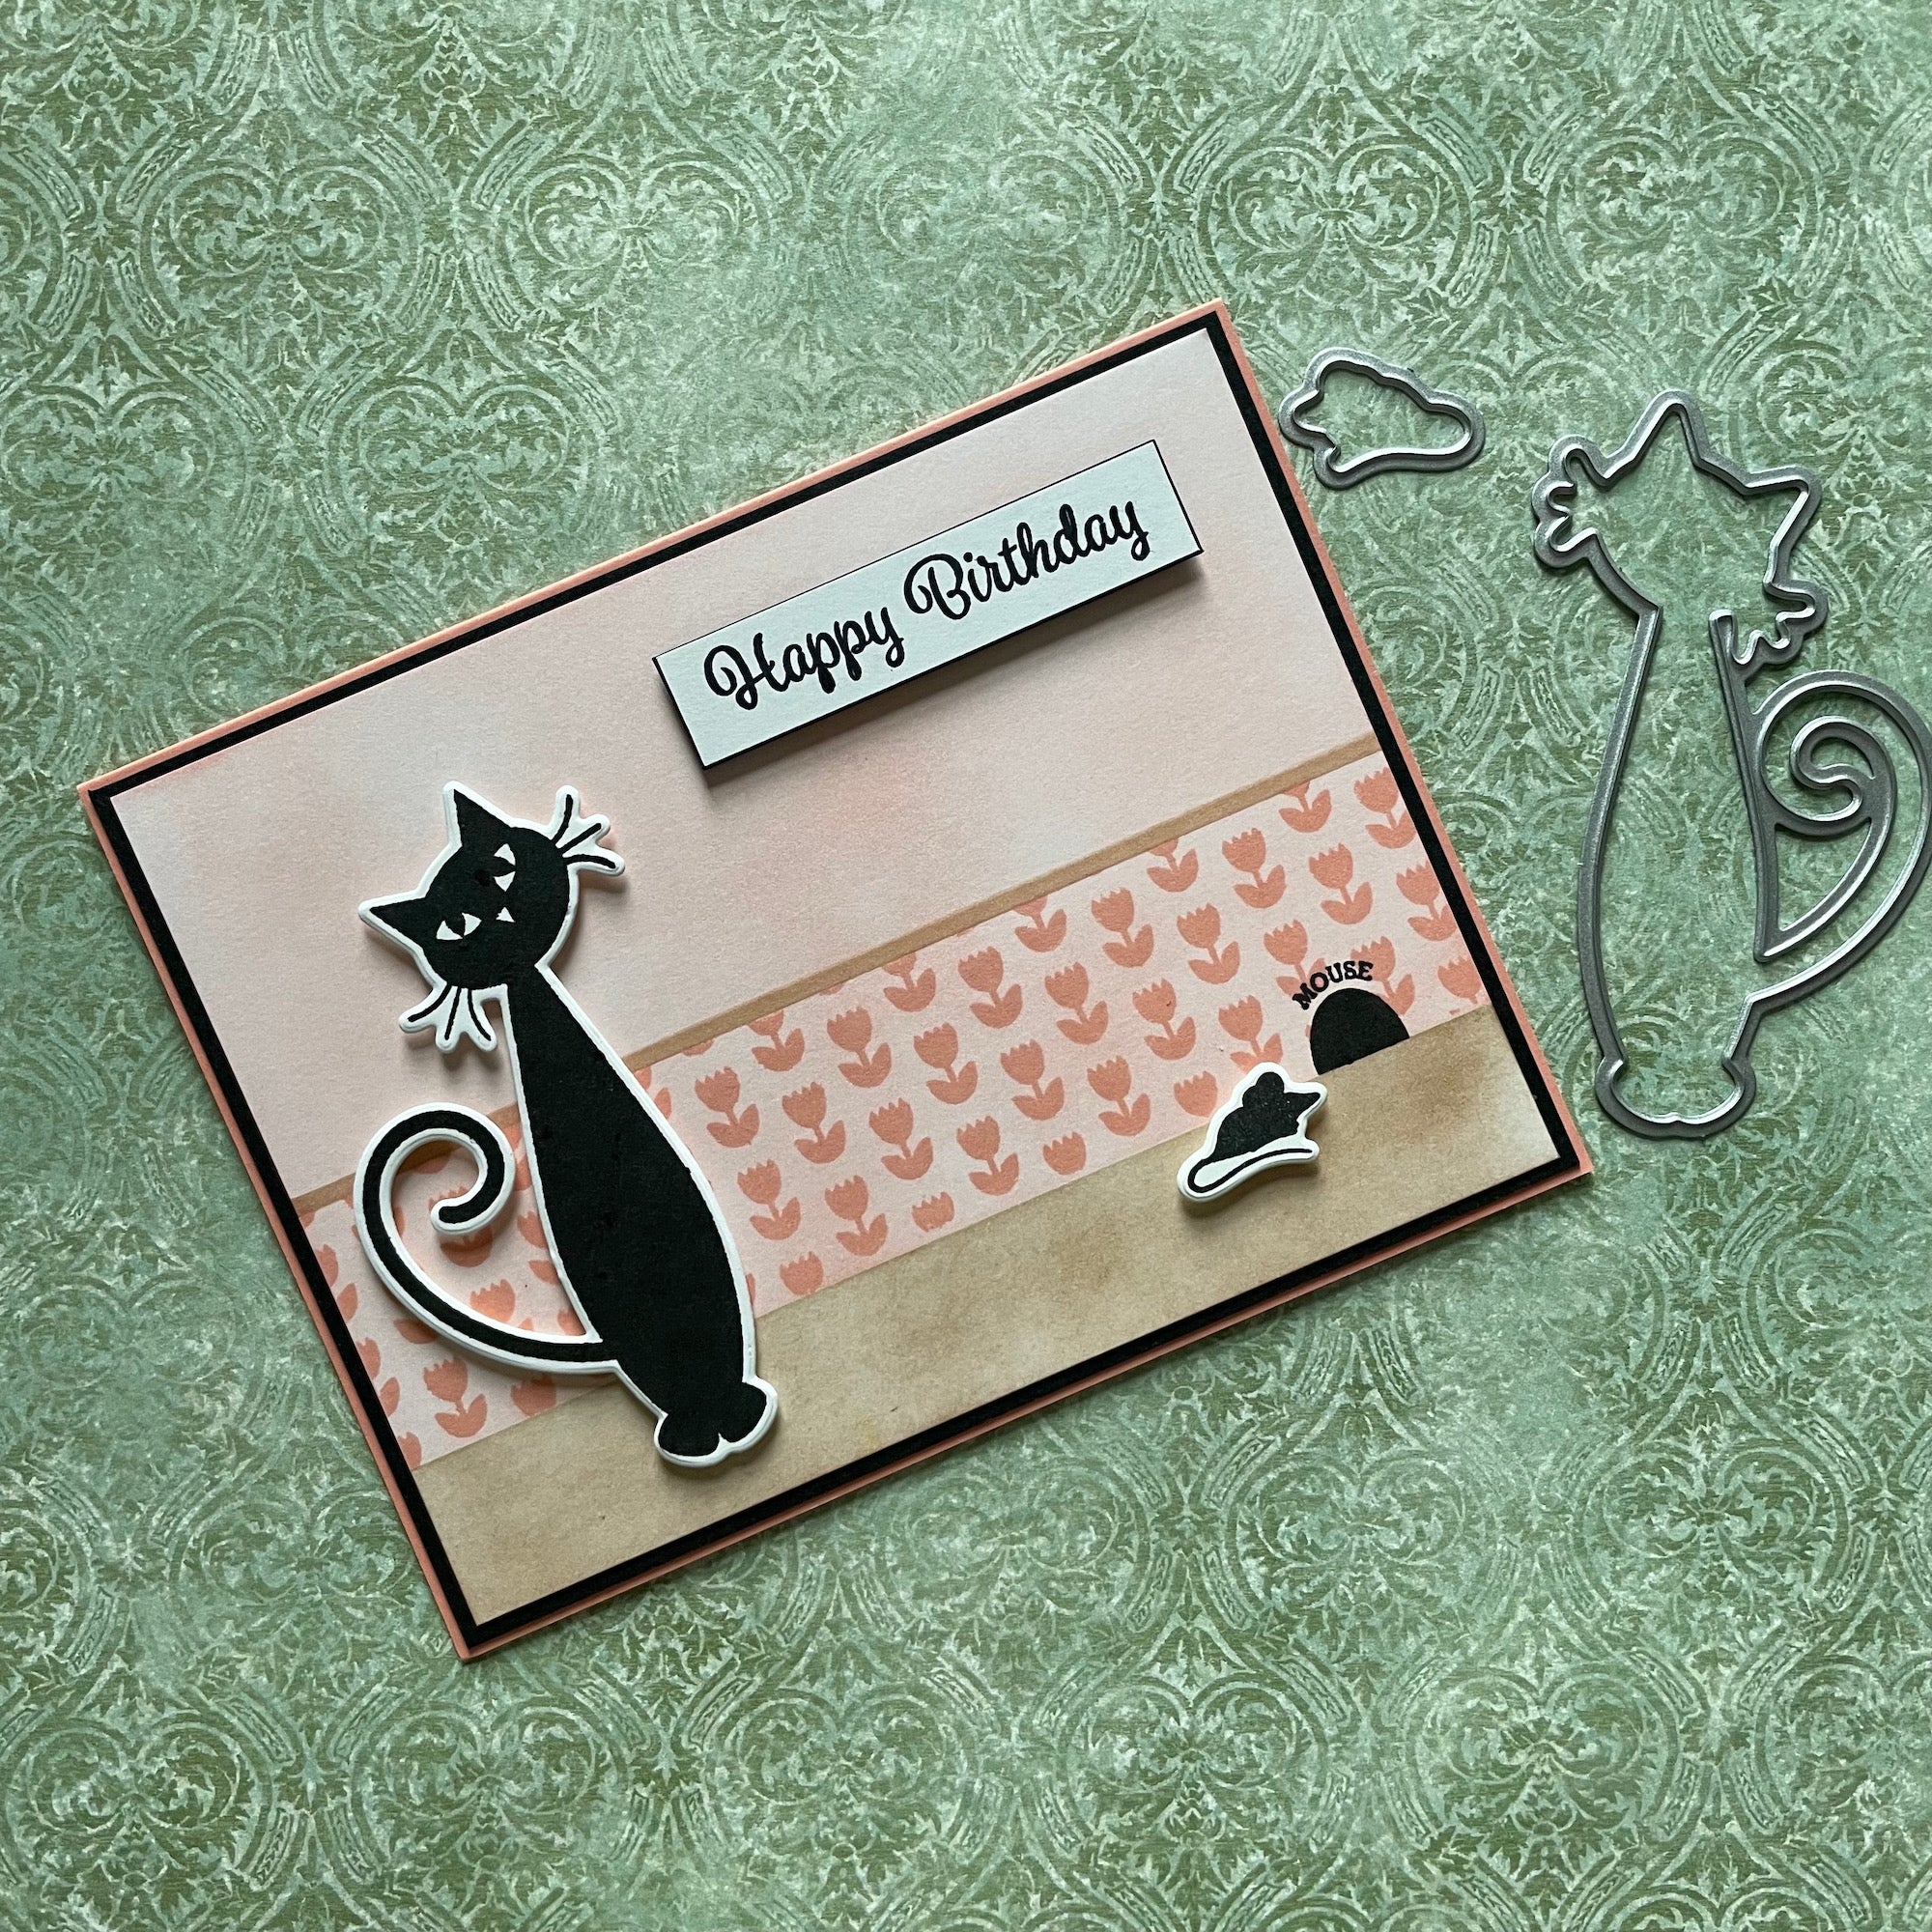 Birthday Cat Stamps